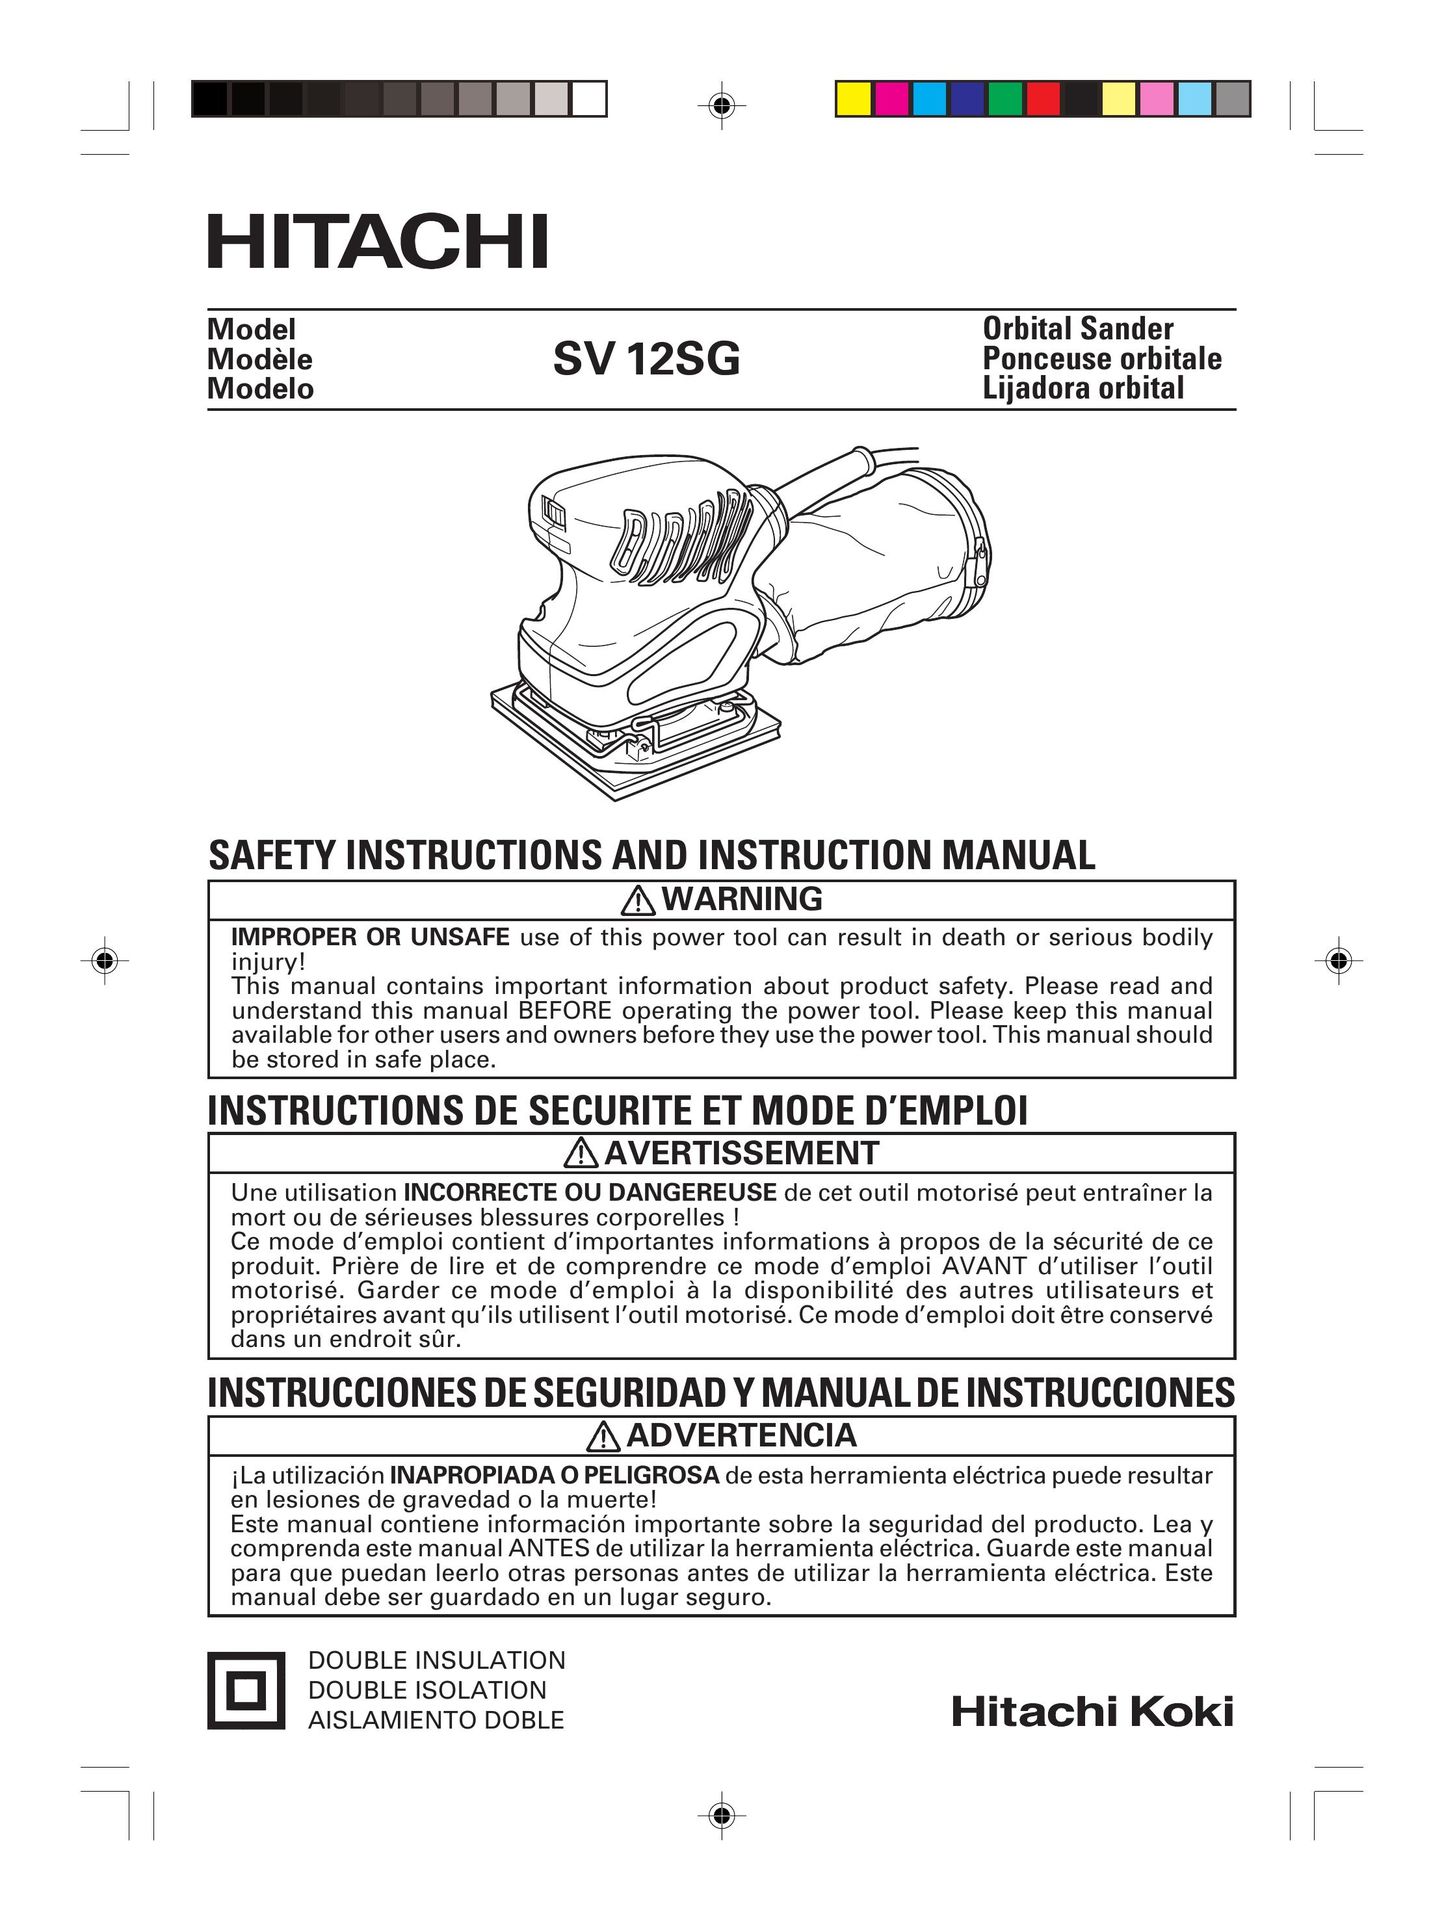 Hitachi SV 12SG Sander User Manual